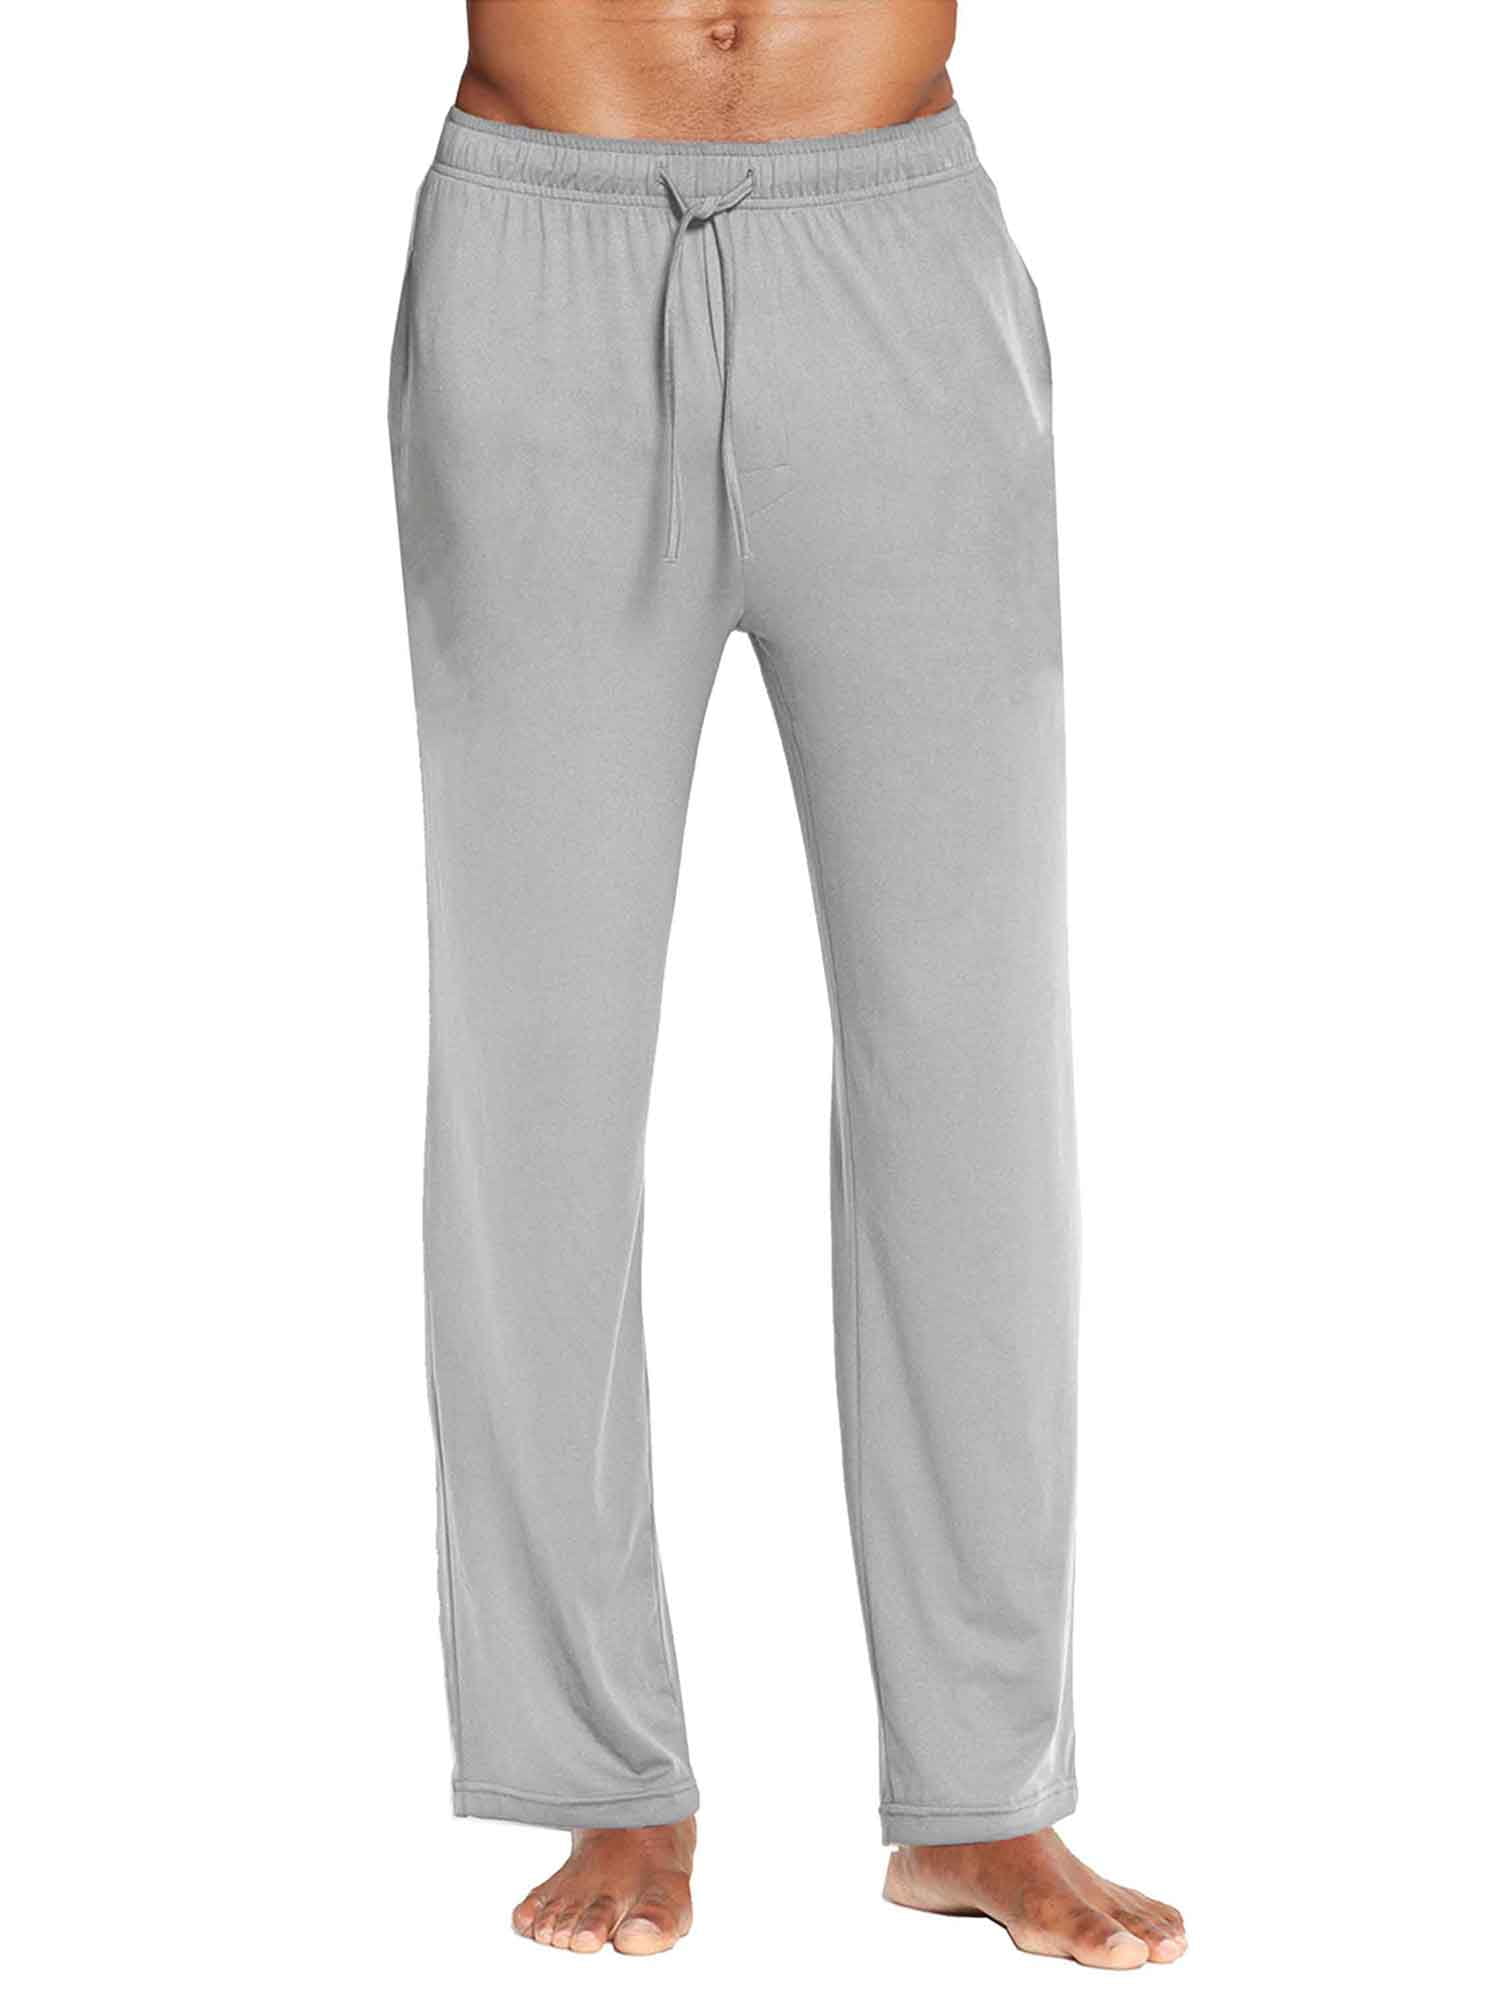 Galaxy by Harvic Men Classic Lounge Male Pants (Sizes, S-3XL) - Walmart.com